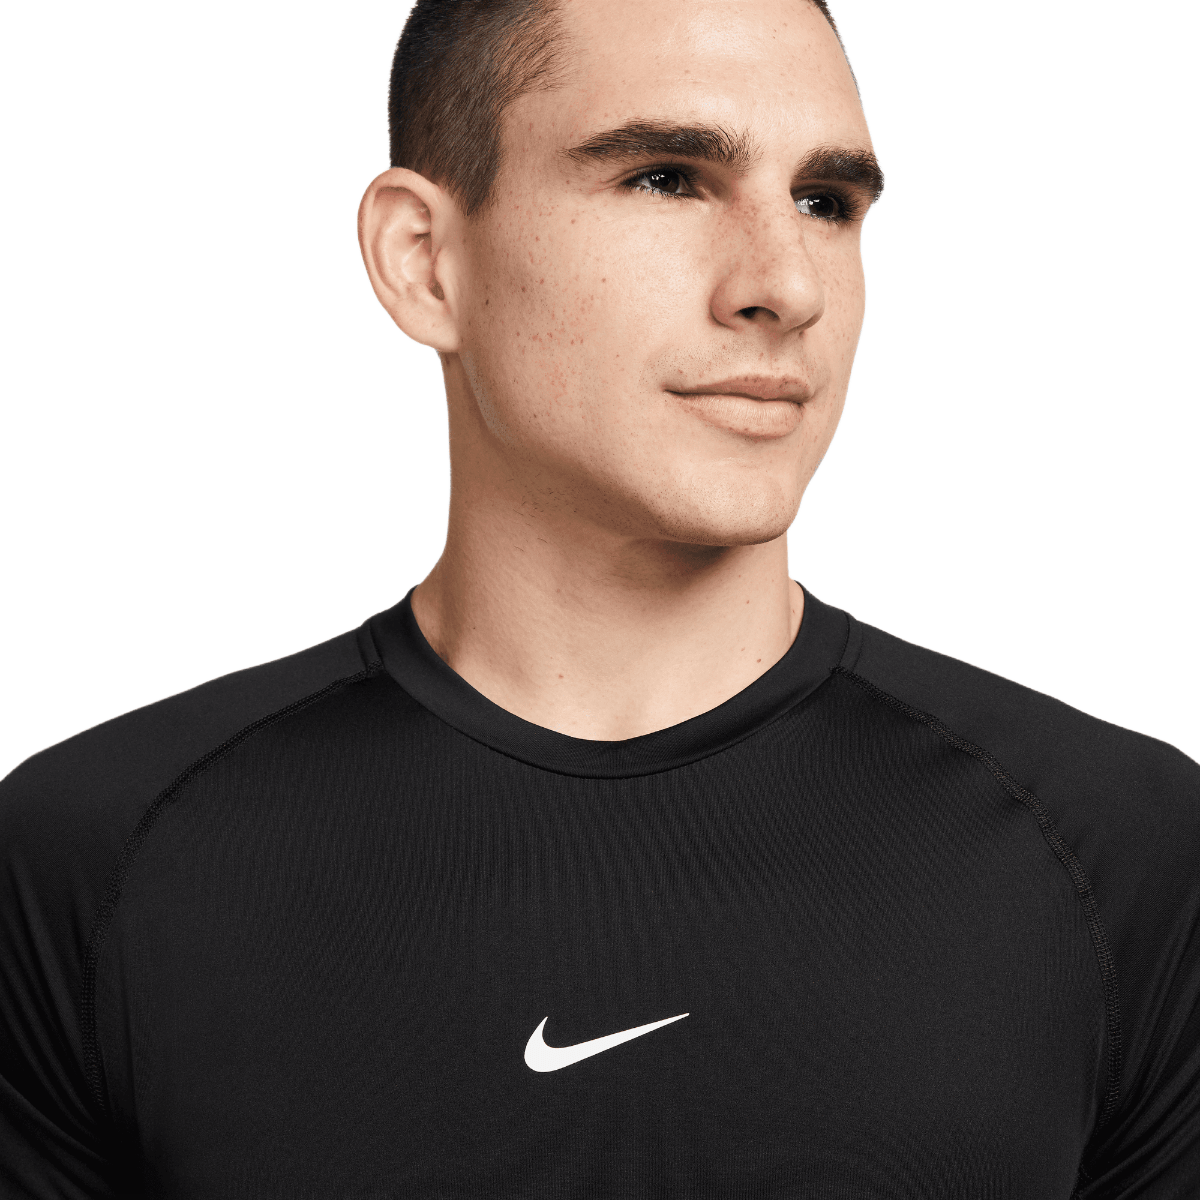 Nike Pro Dri-FIT Men's Tight-Fit Long-Sleeve Top. Nike IN